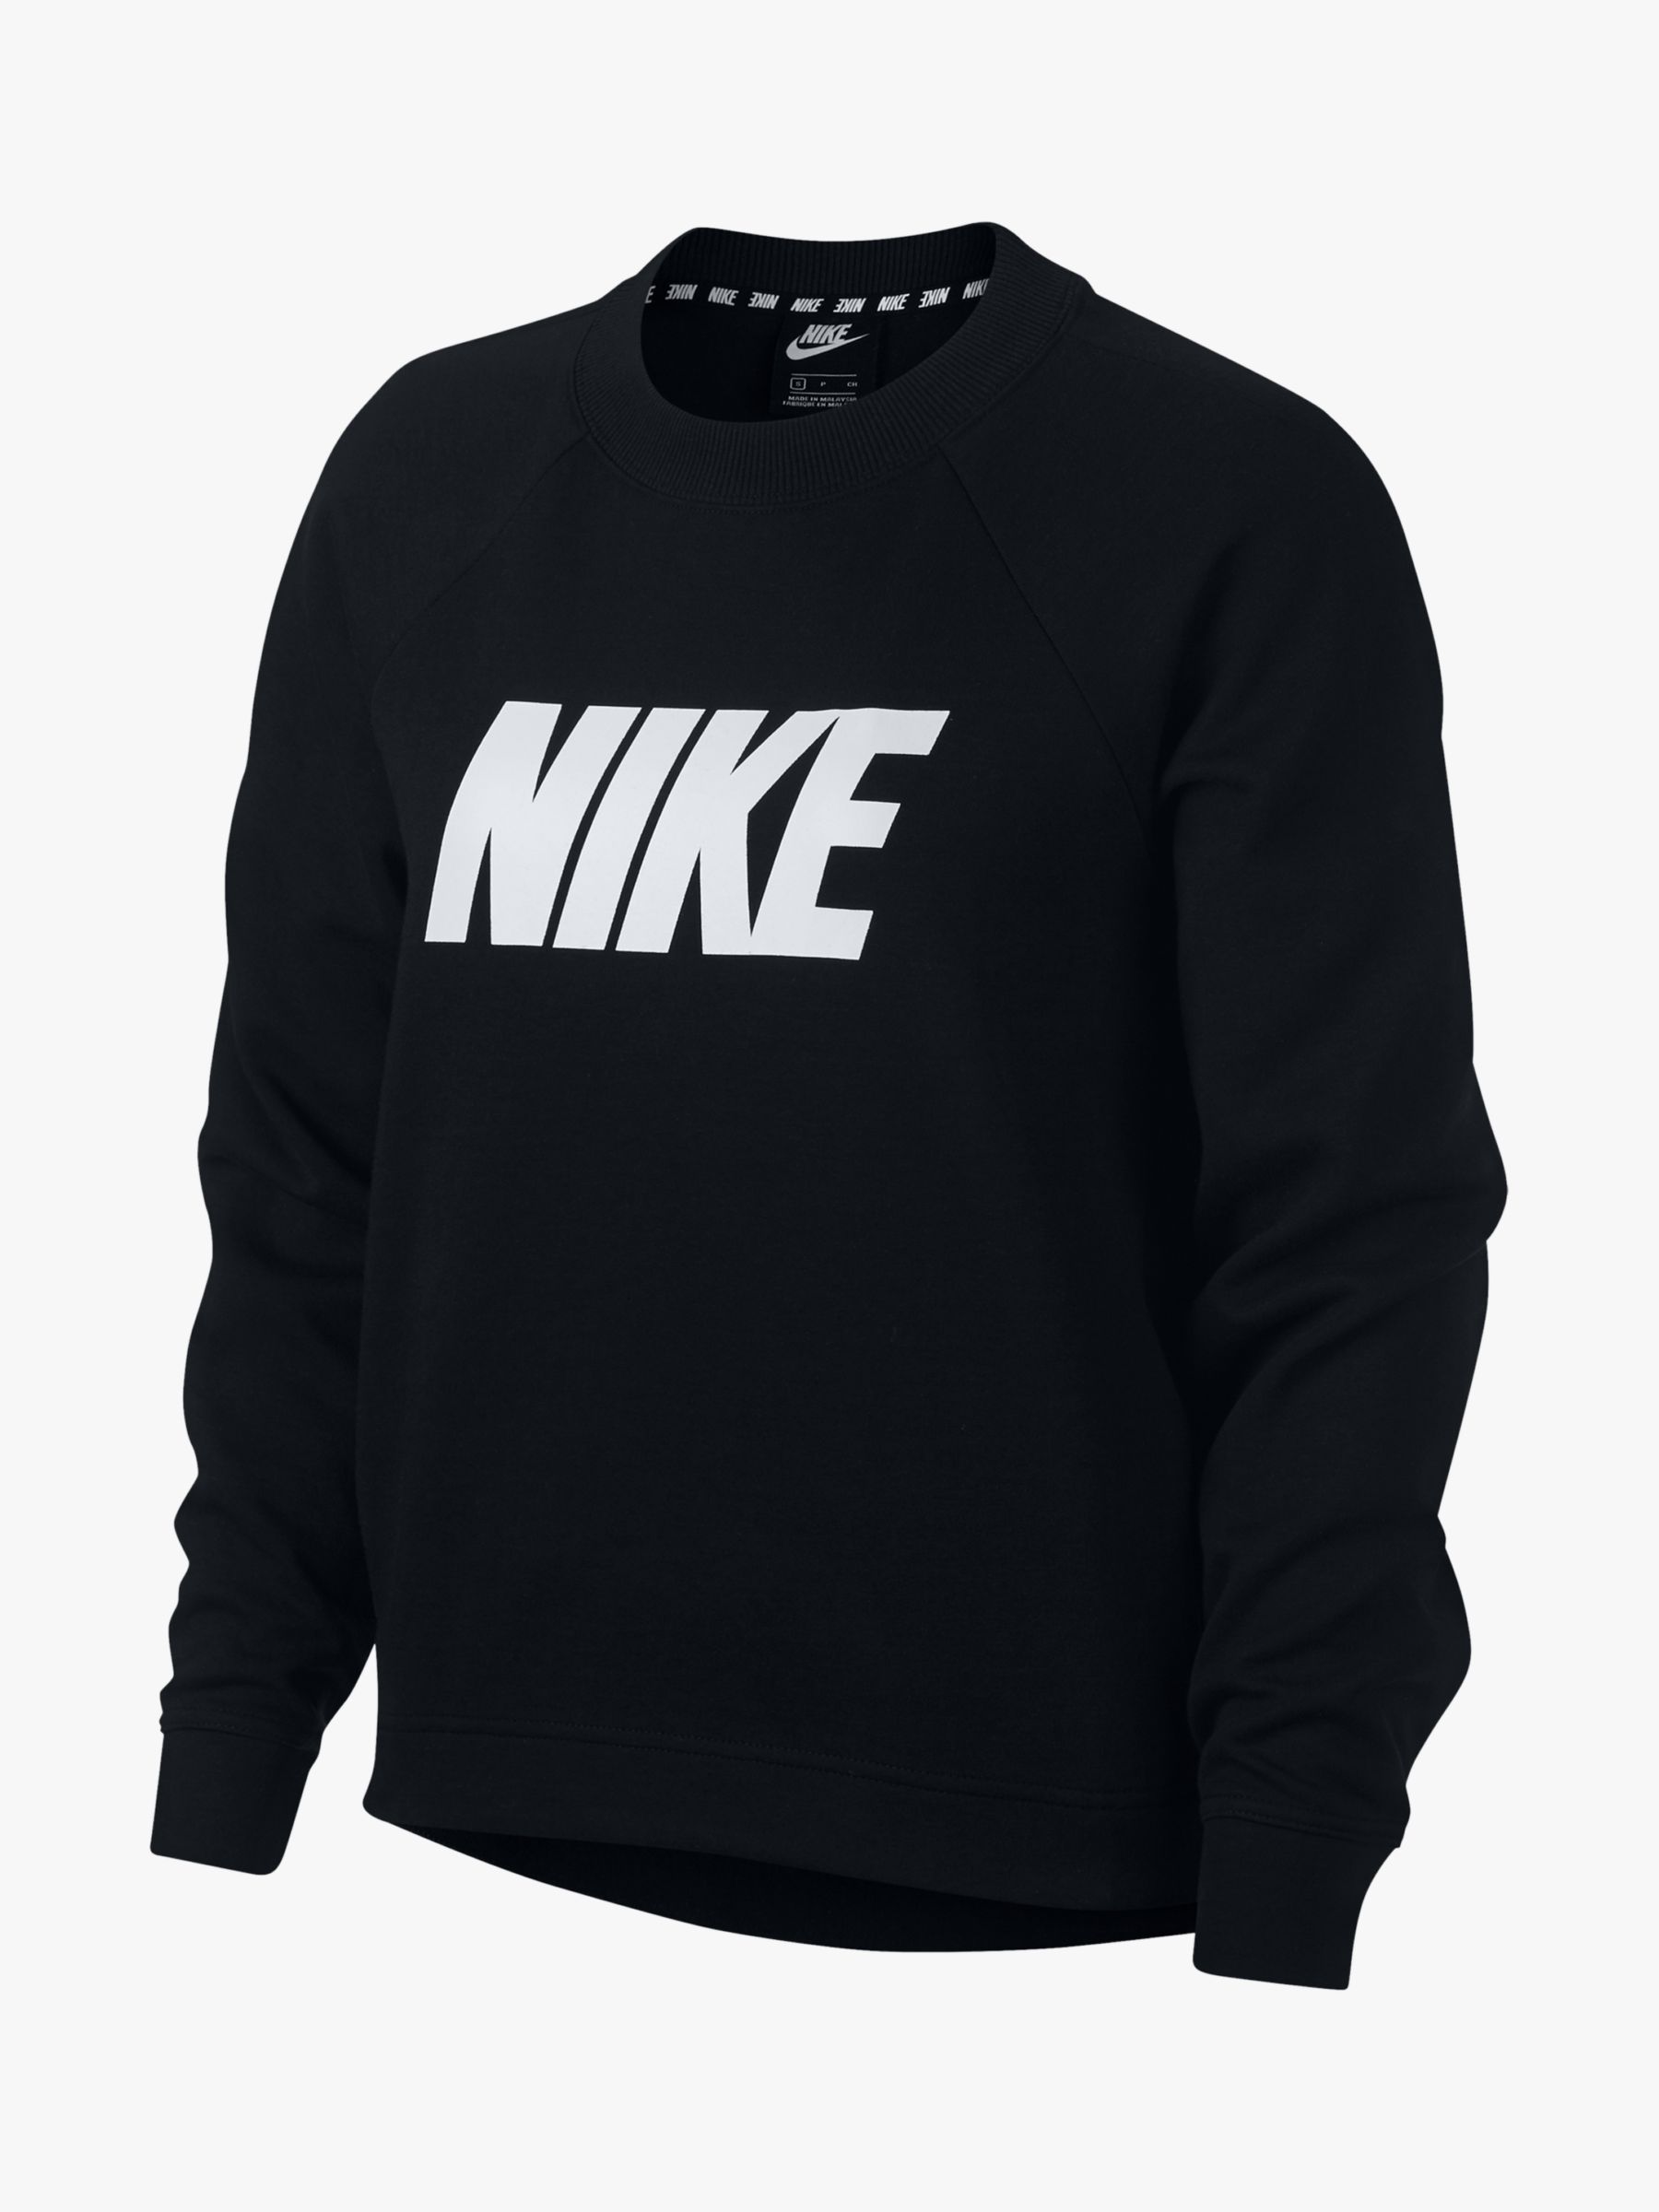 nike black and white sweatshirt